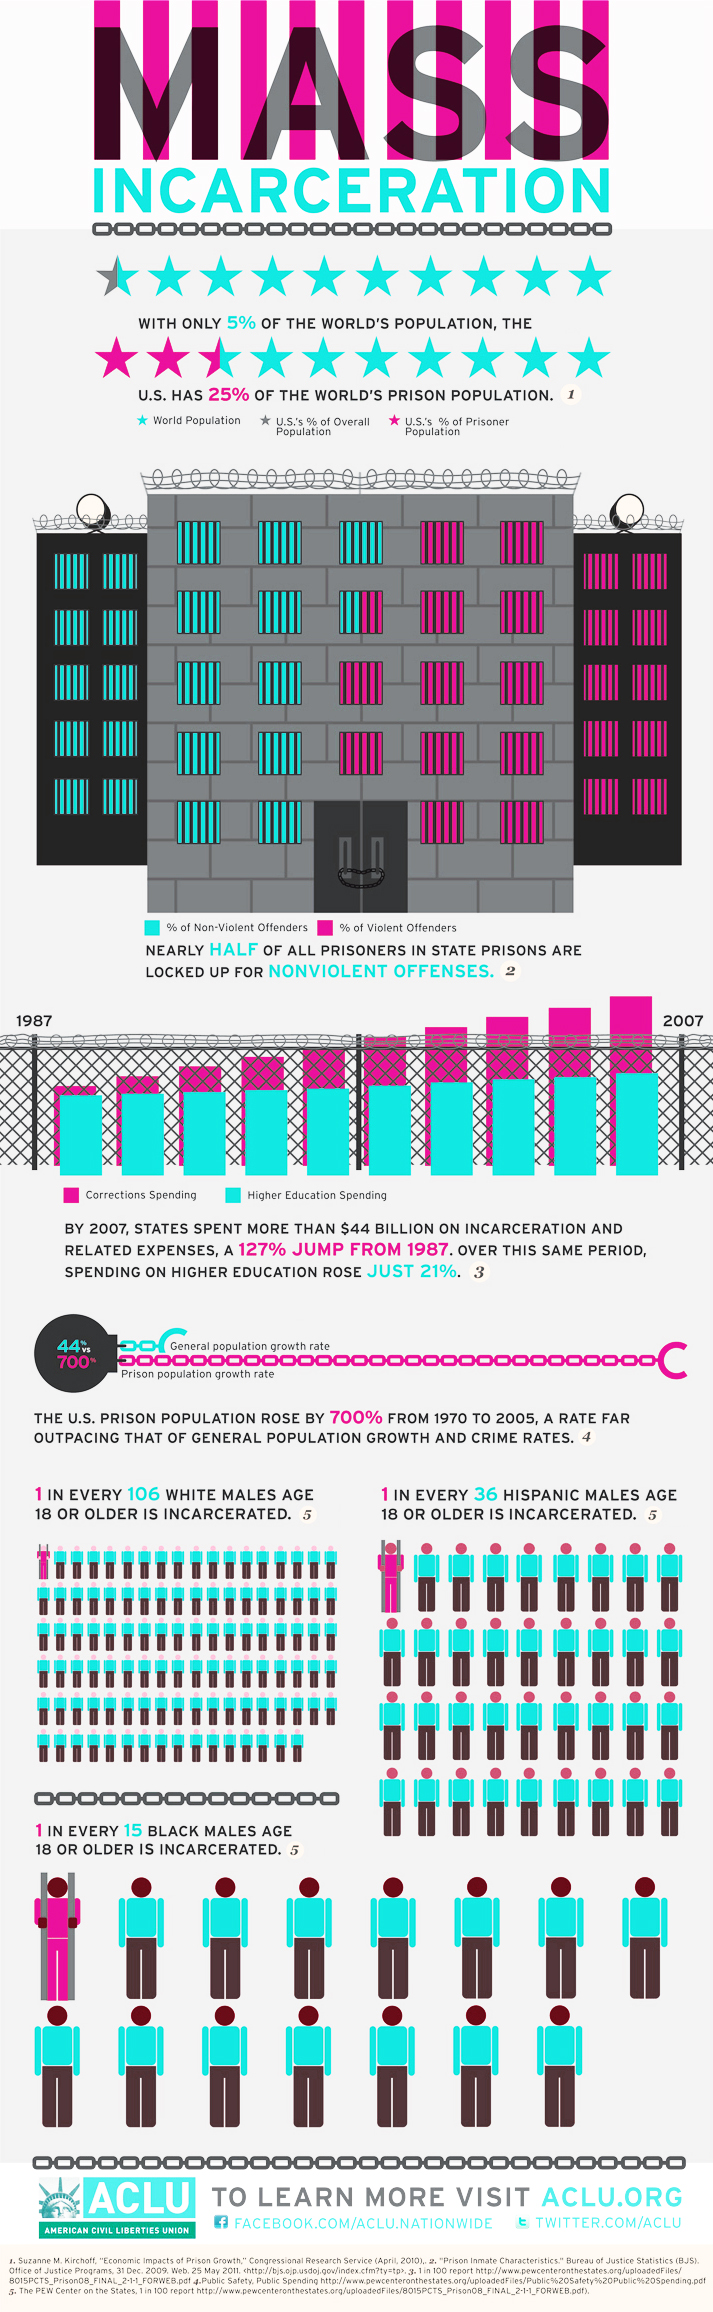 mass-incarceration-infographic